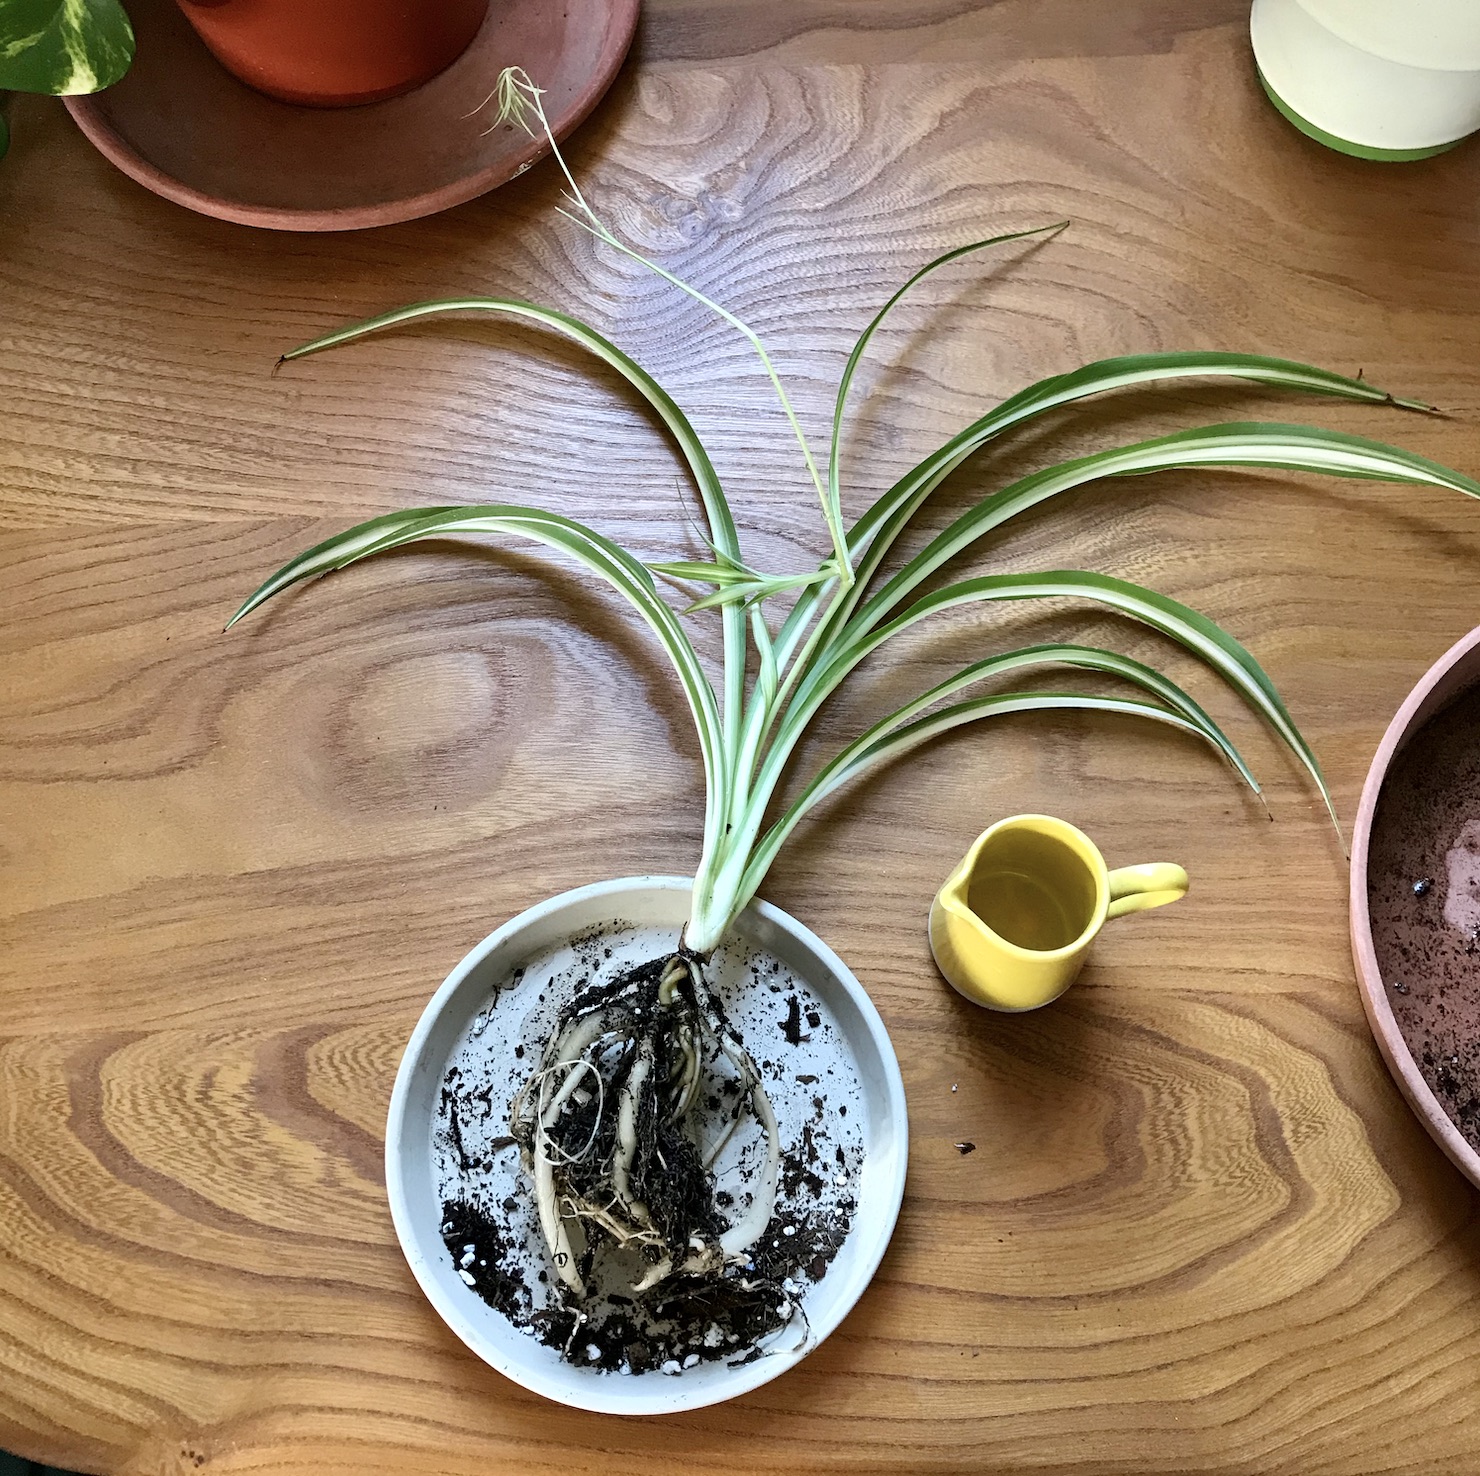 Spider plant rescue: Spring equinox repotting diaries